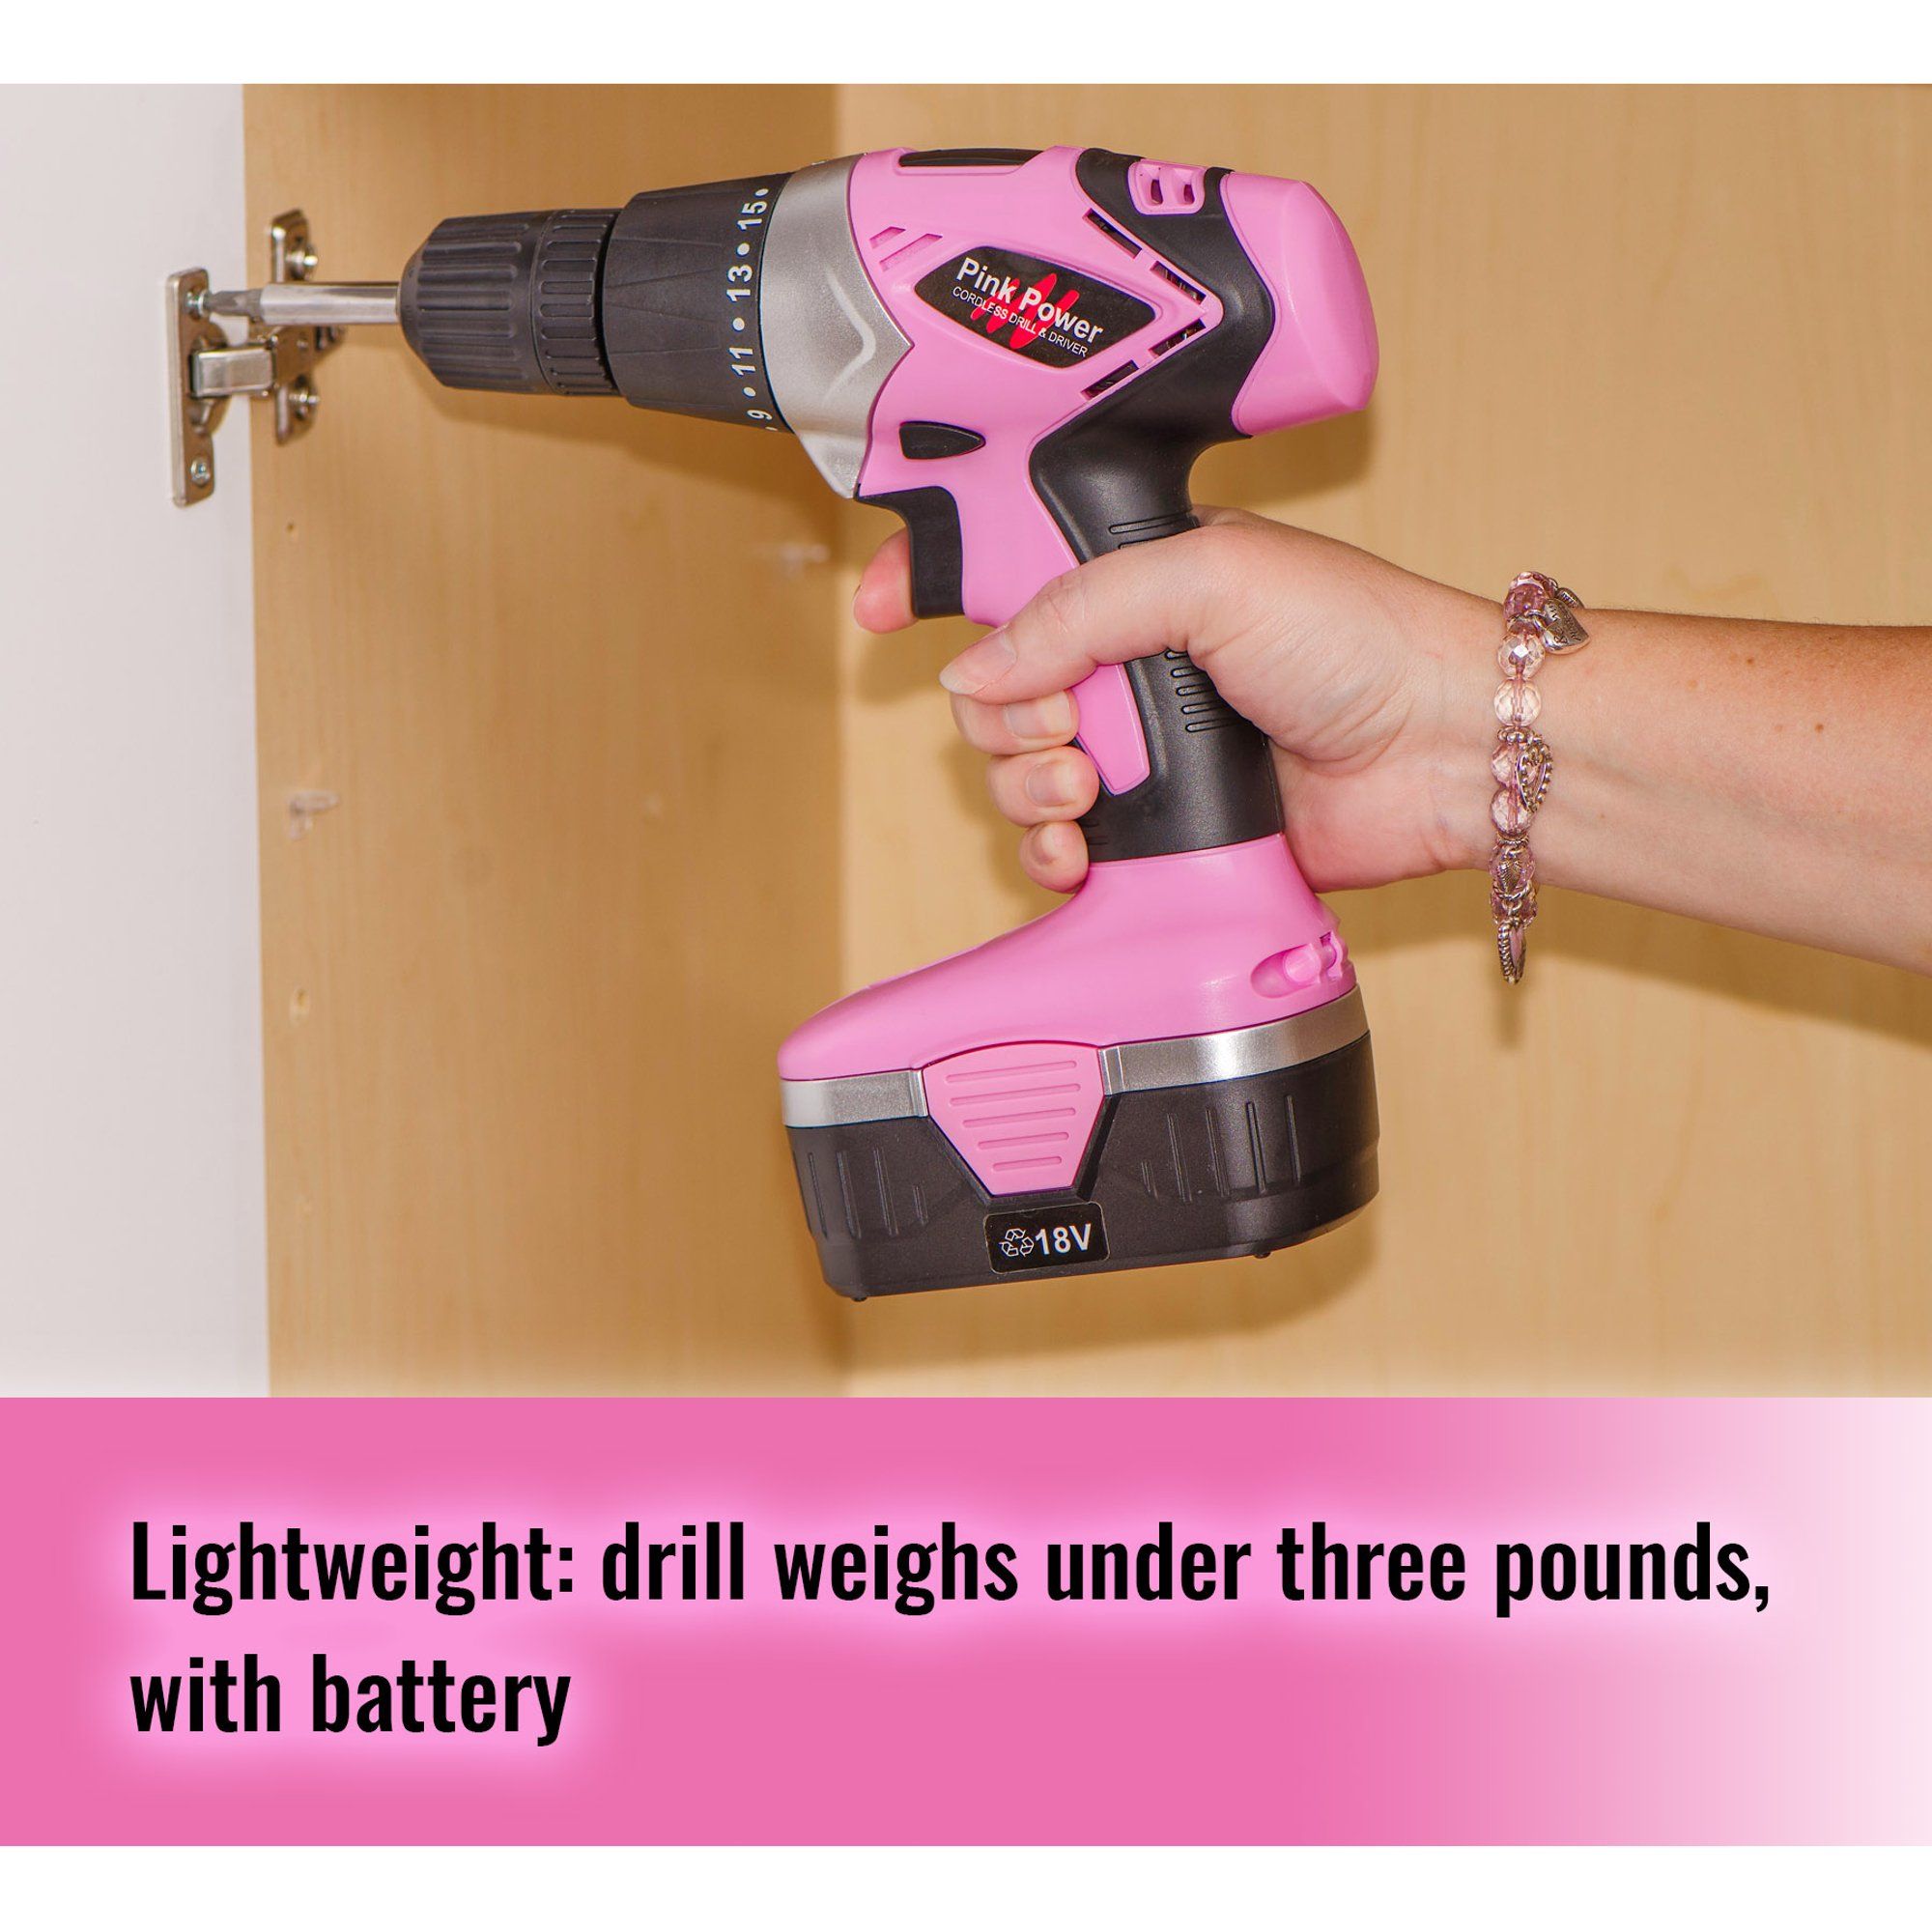 PP182 18-Volt NiCad Cordless Drill Kit | Pink Power